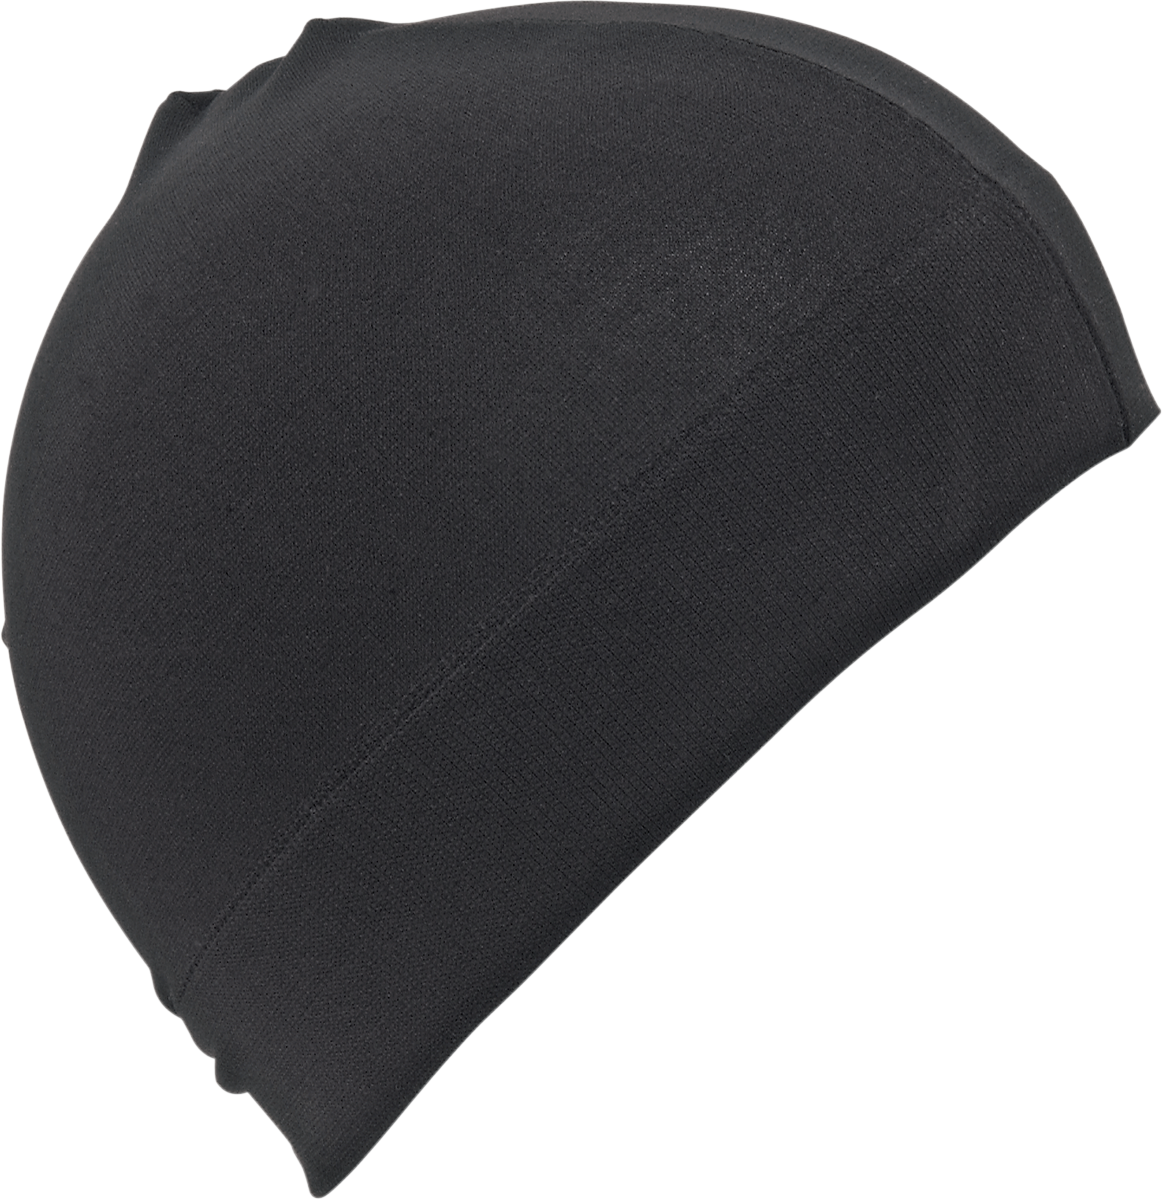 ZAN HEADGEAR Nylon Dome Skull Cap Helmet Liner - Black ND001